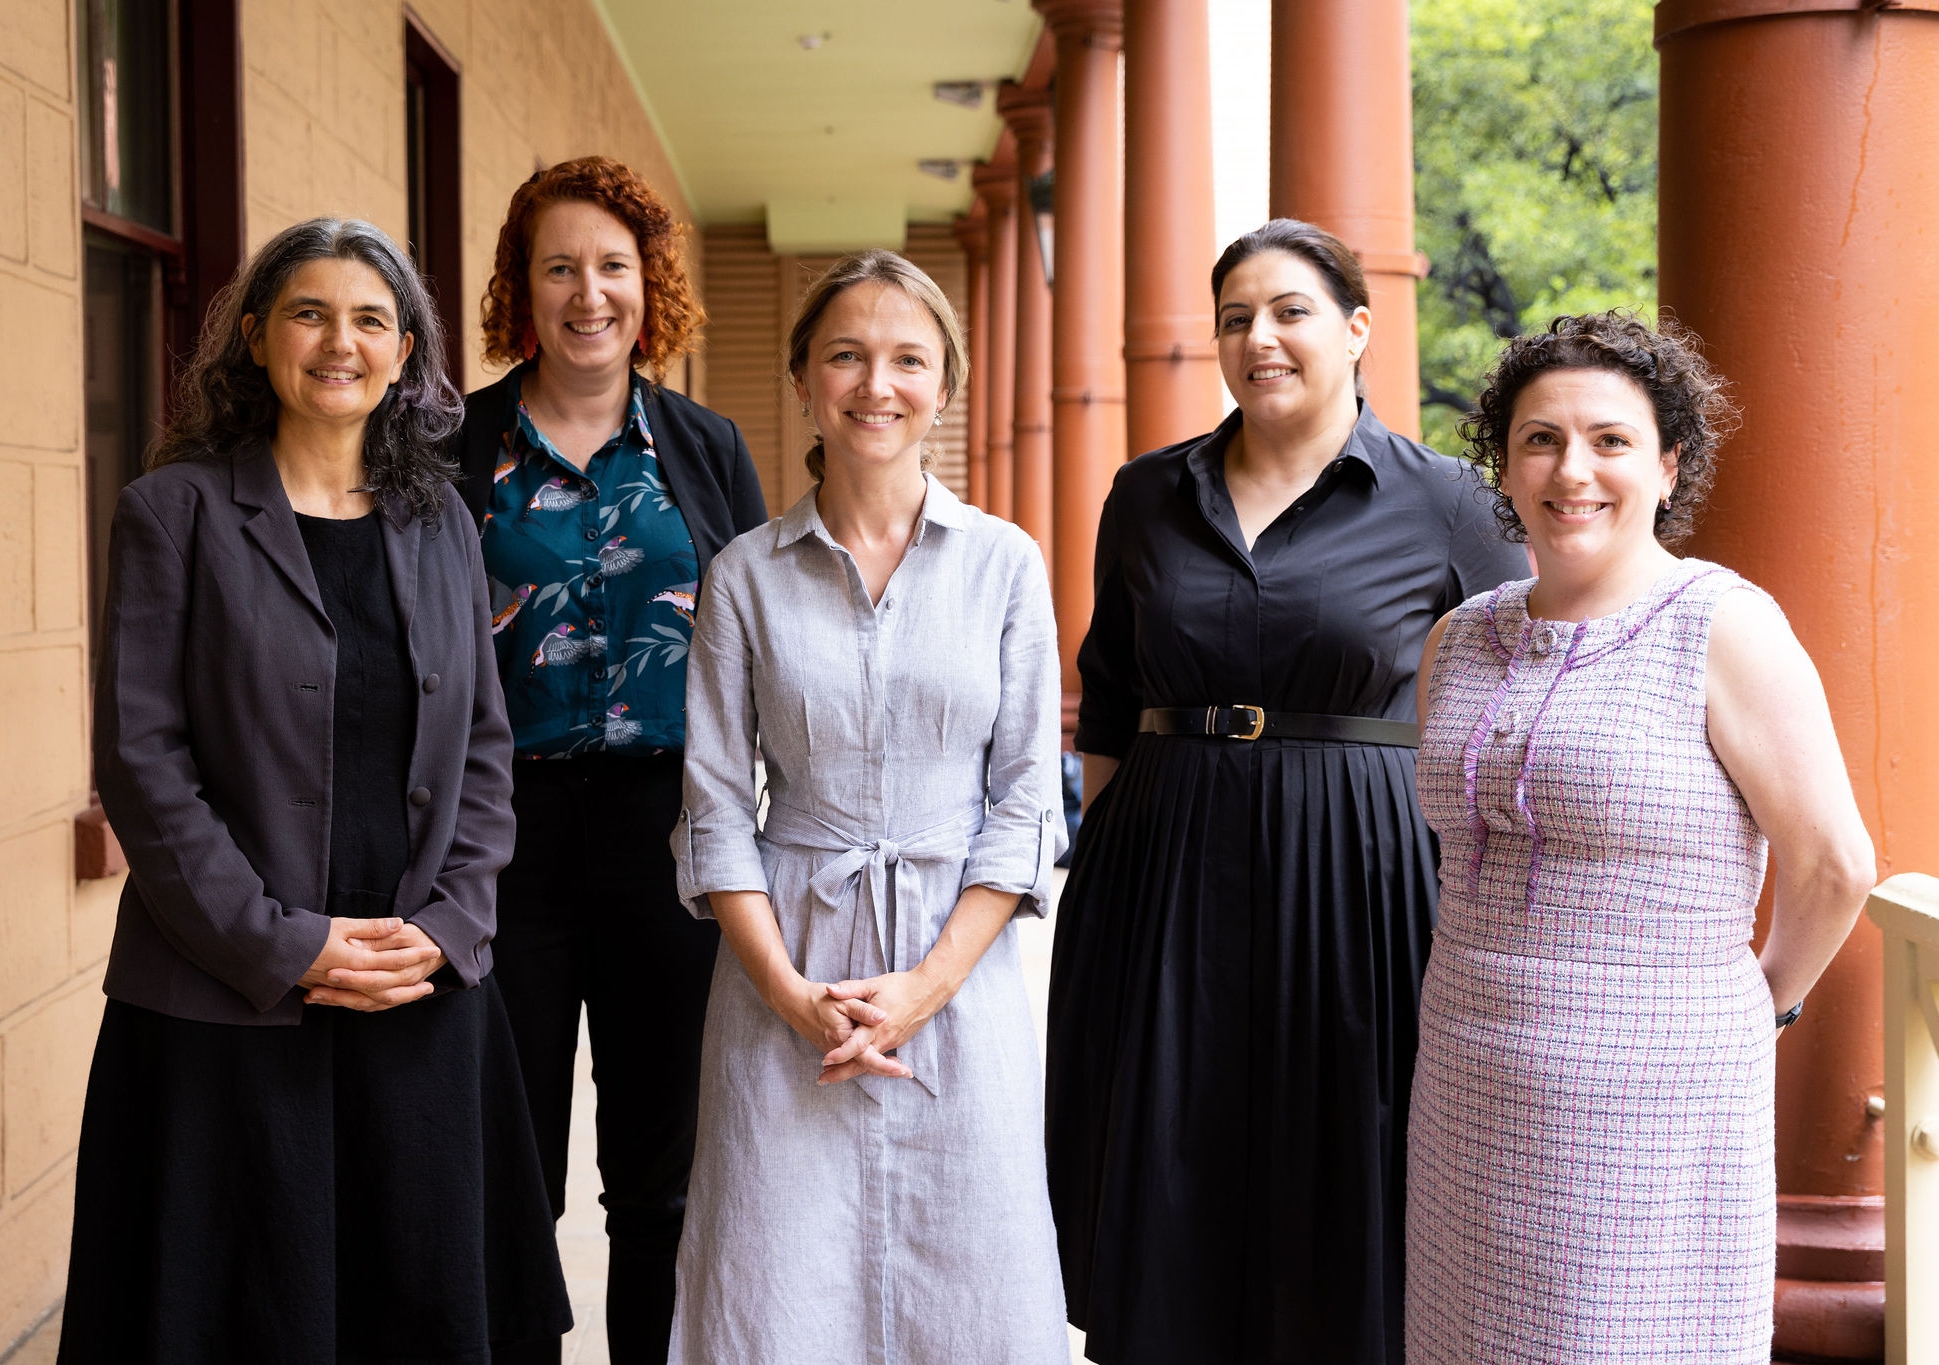 2021 Pathways to Politics Program for Women alumni from left to right: Mychel Ellis, Ann Stevenson, Beth Sainty-Gale, Grazia Siciliano, Inna Kiner. Photo: Supplied.